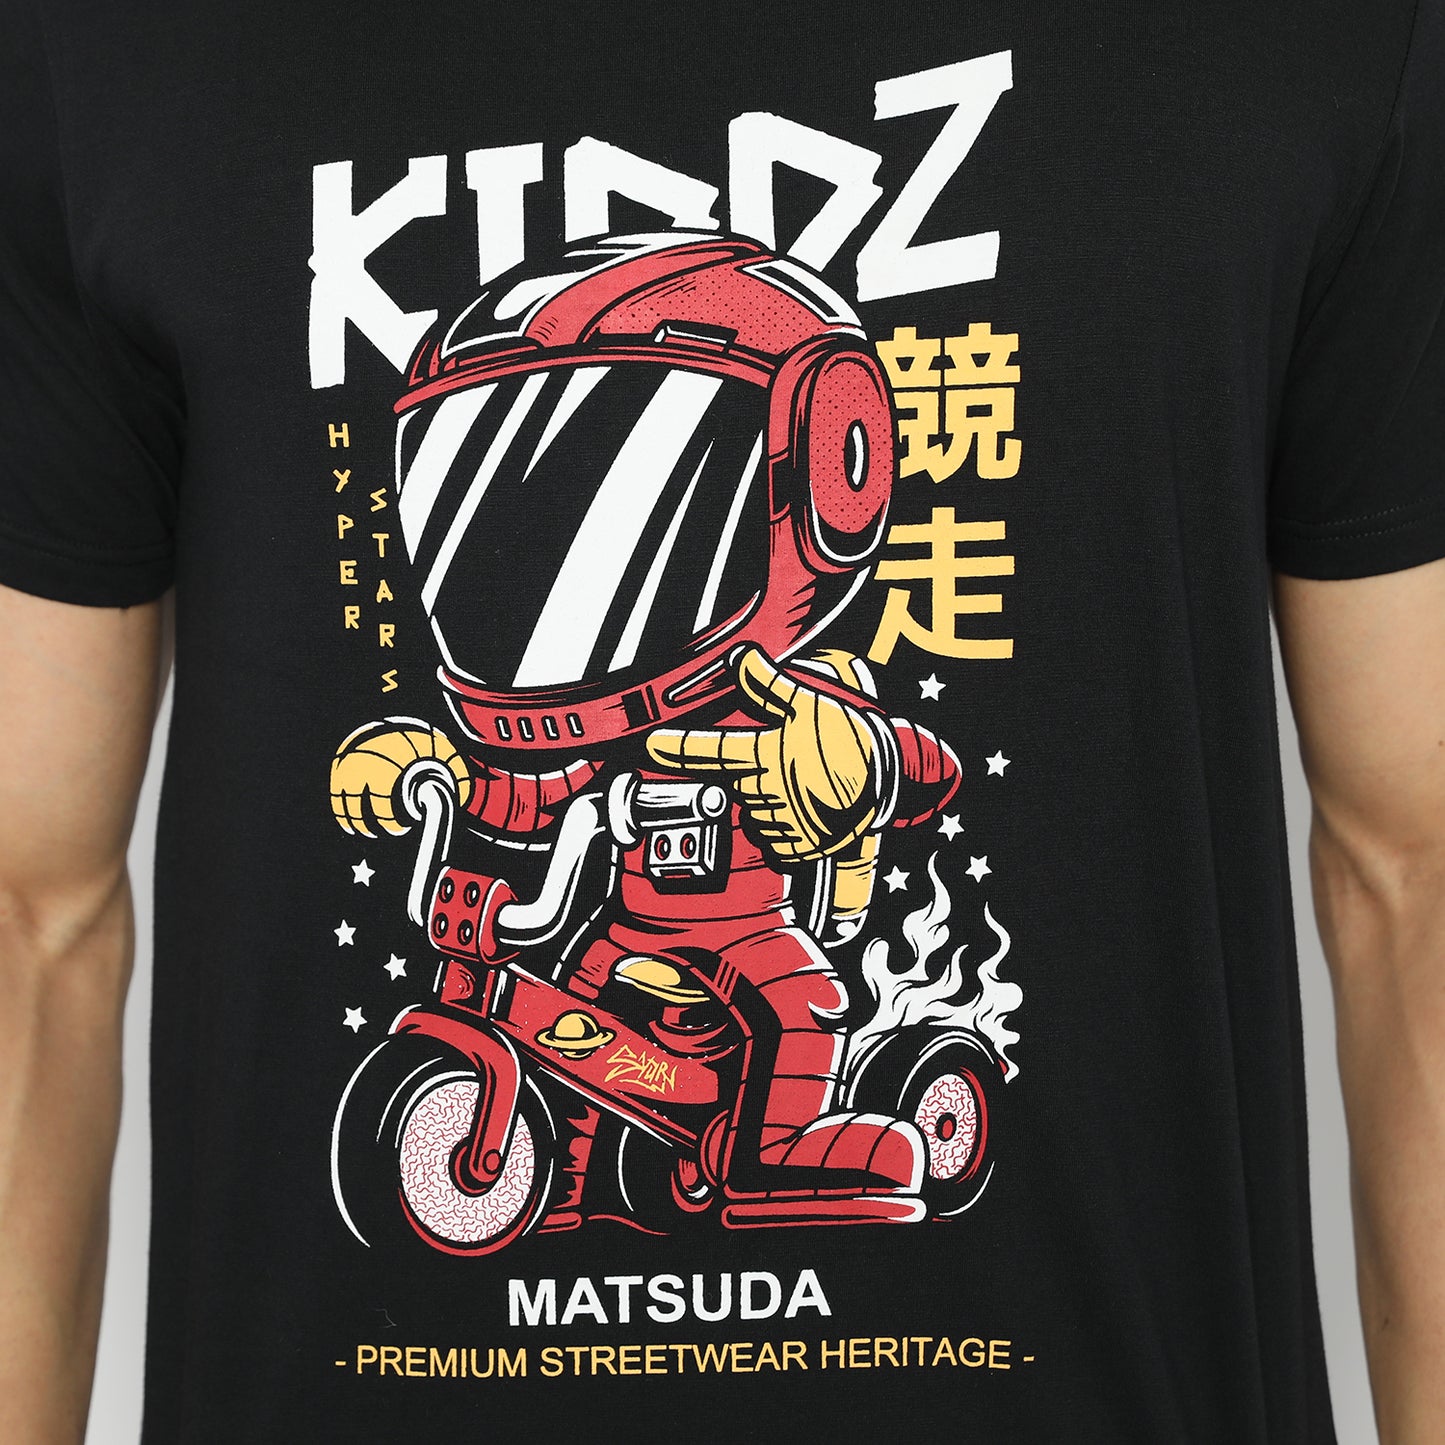 MATSUDA Kaos T shirt Date Rider